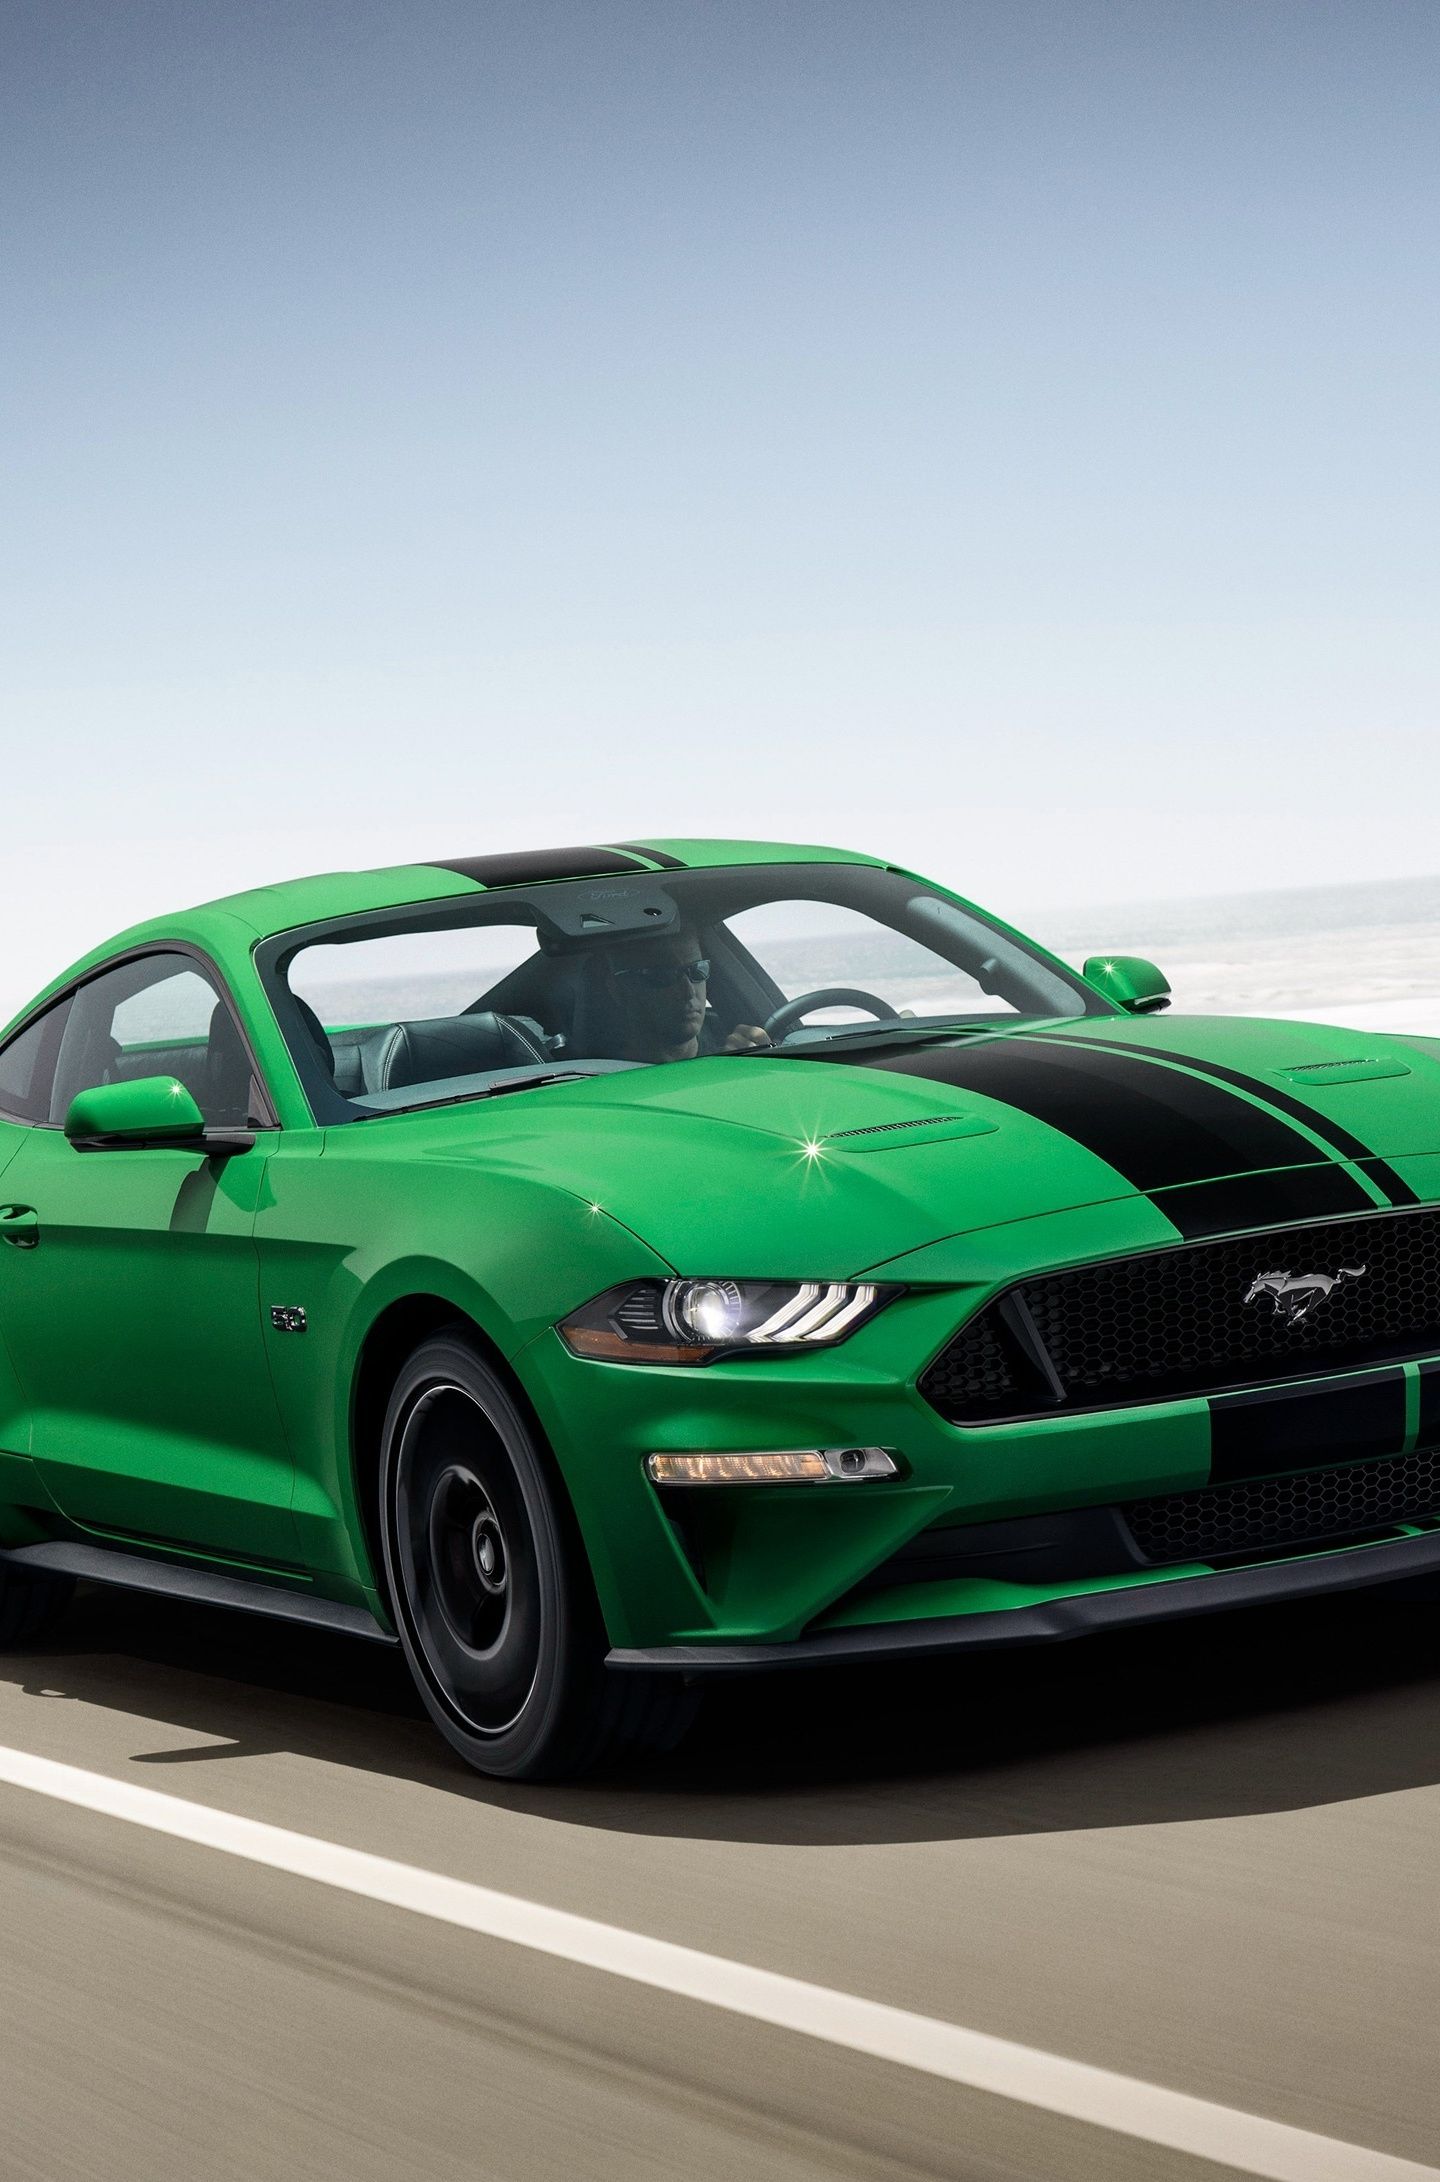 Ford Mustang Gt Fastback, Green Car, Wallpaper Mustang Green